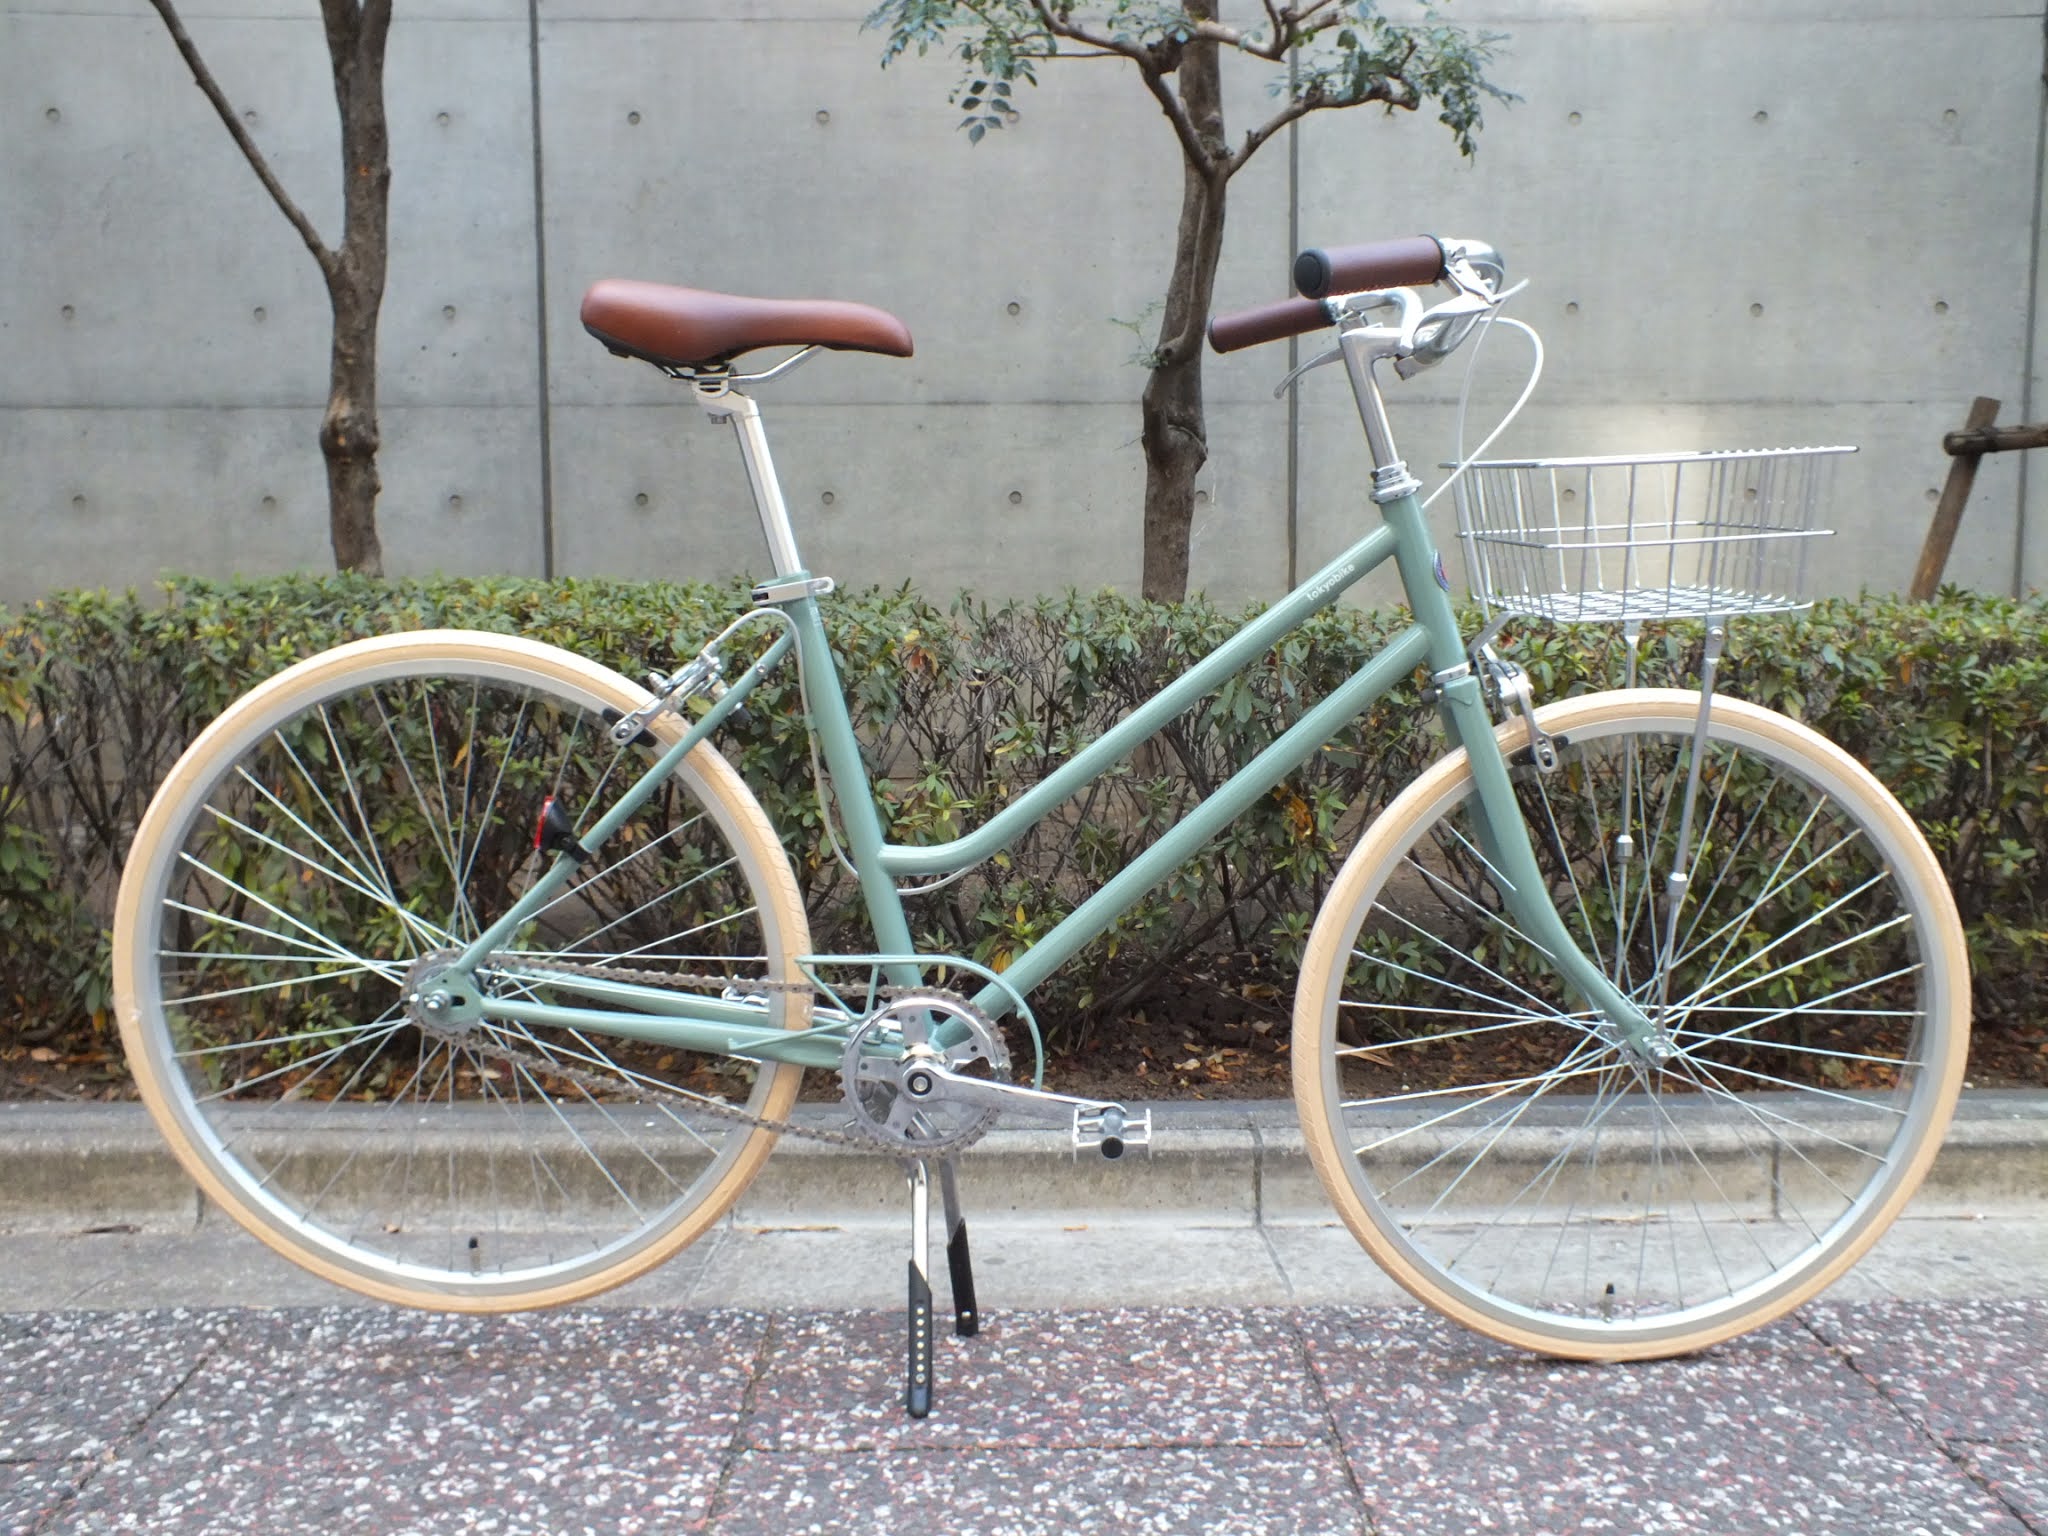 avelo Bicycle shop | アヴェロ バイシクル ショップ 浦和: tokyobike ...